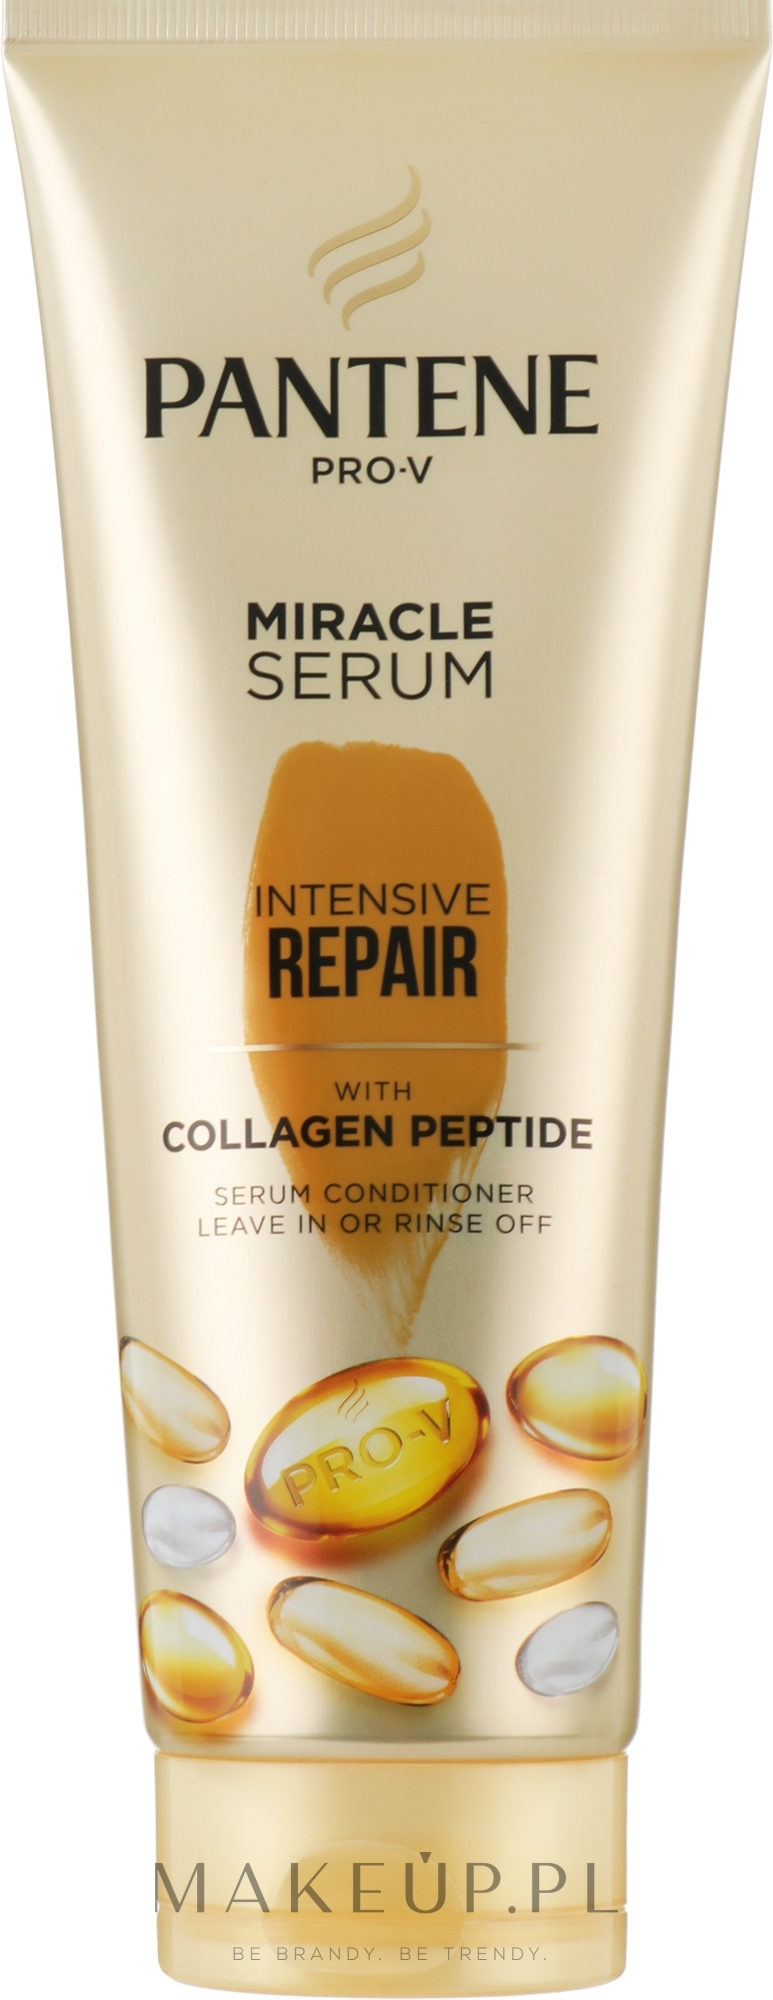 Intensywne serum naprawcze do włosów - Pantene Pro-V Intensive Repair Miracle Serum With Collagen Peptide — Zdjęcie 200 ml